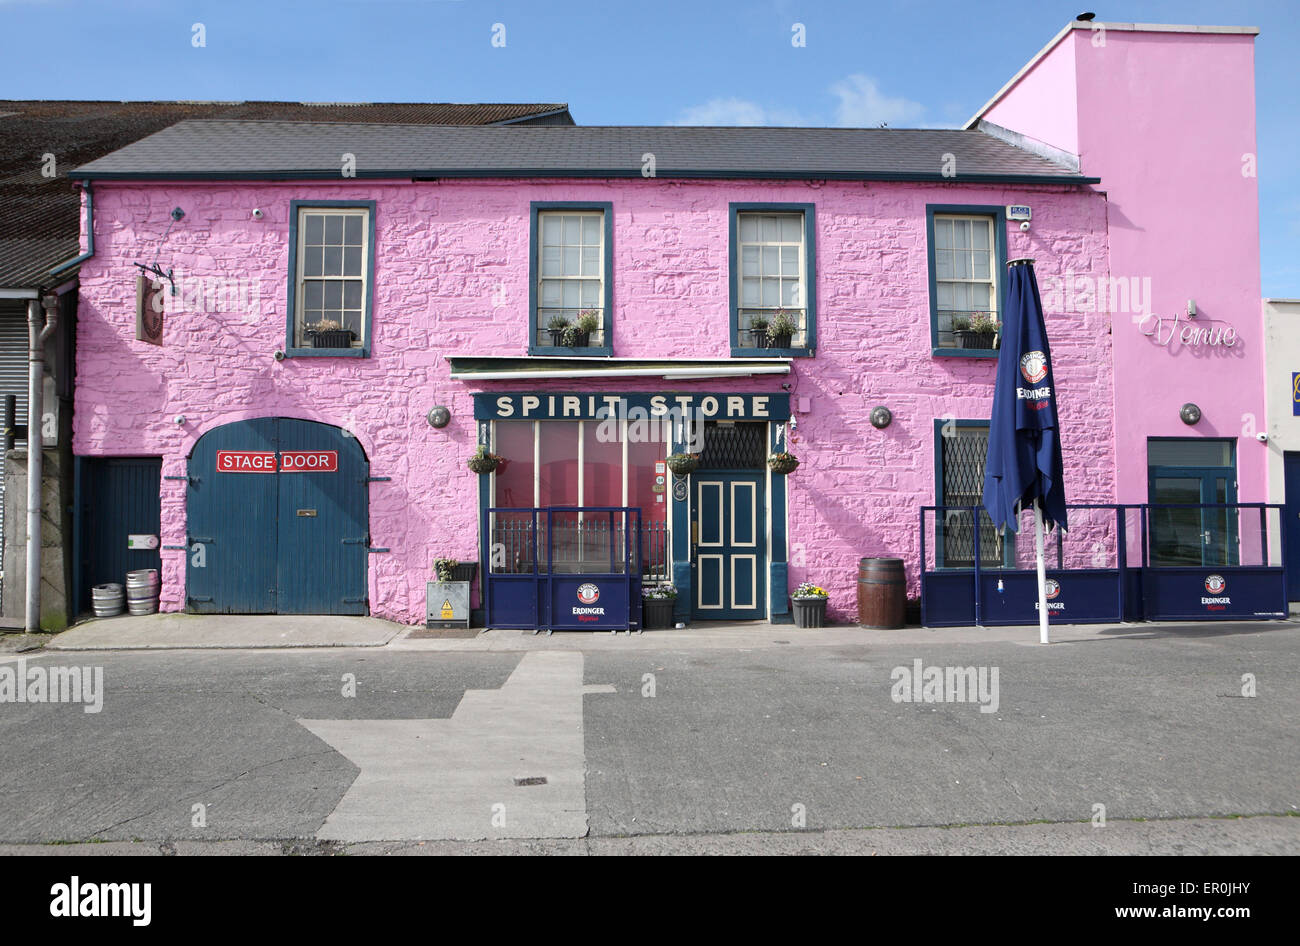 Spirit store pub in Dundalk, Ireland Stock Photo